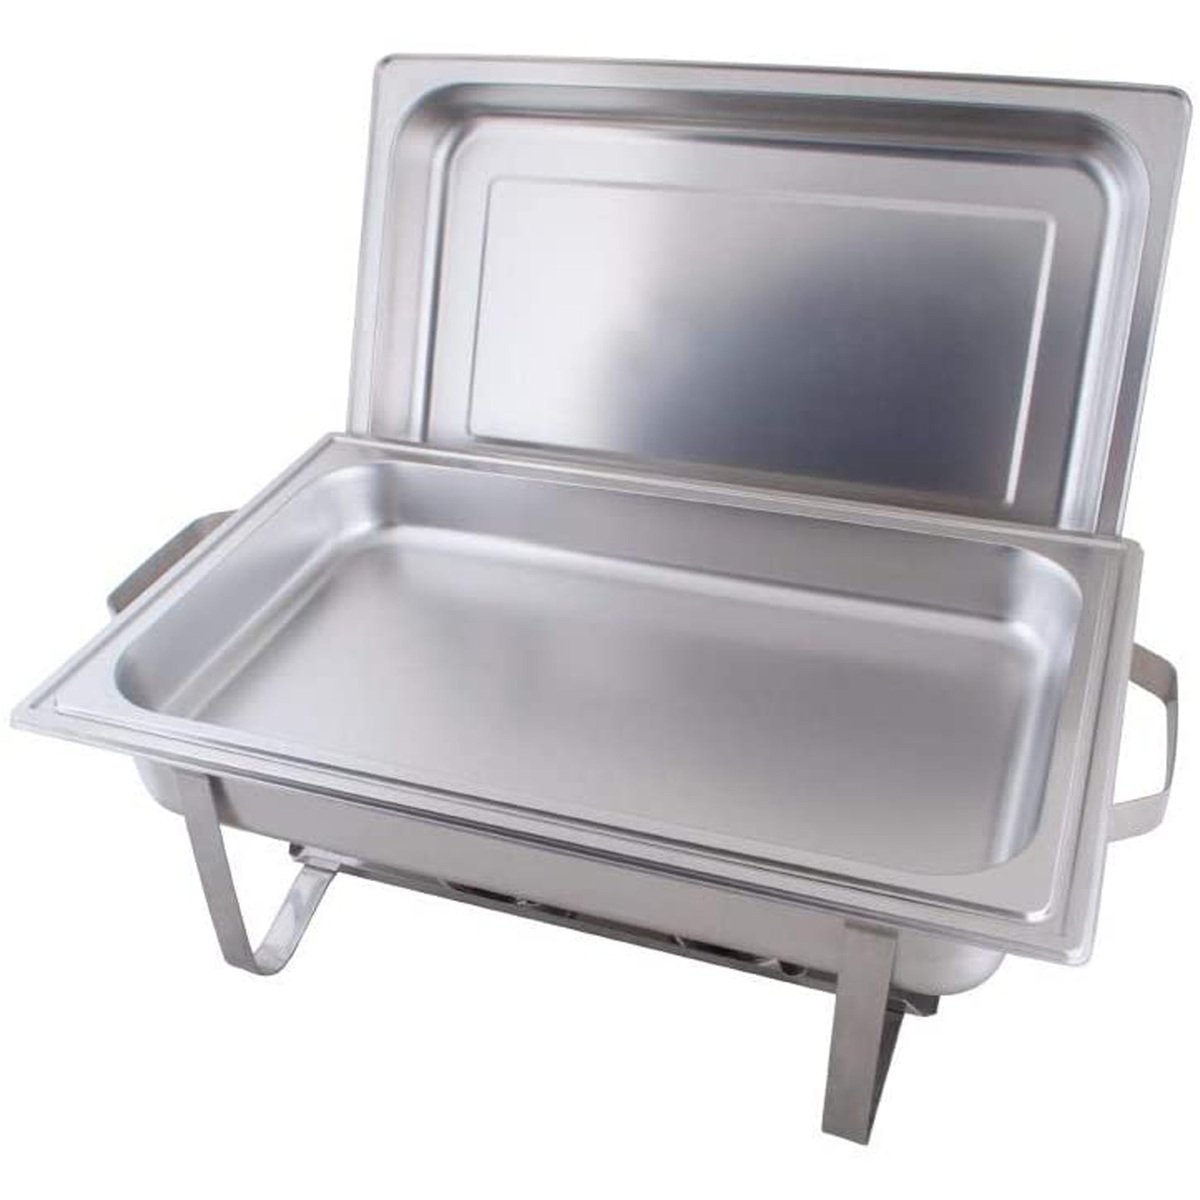 Basurrah Stainless Steel Chafing Dish 16-130